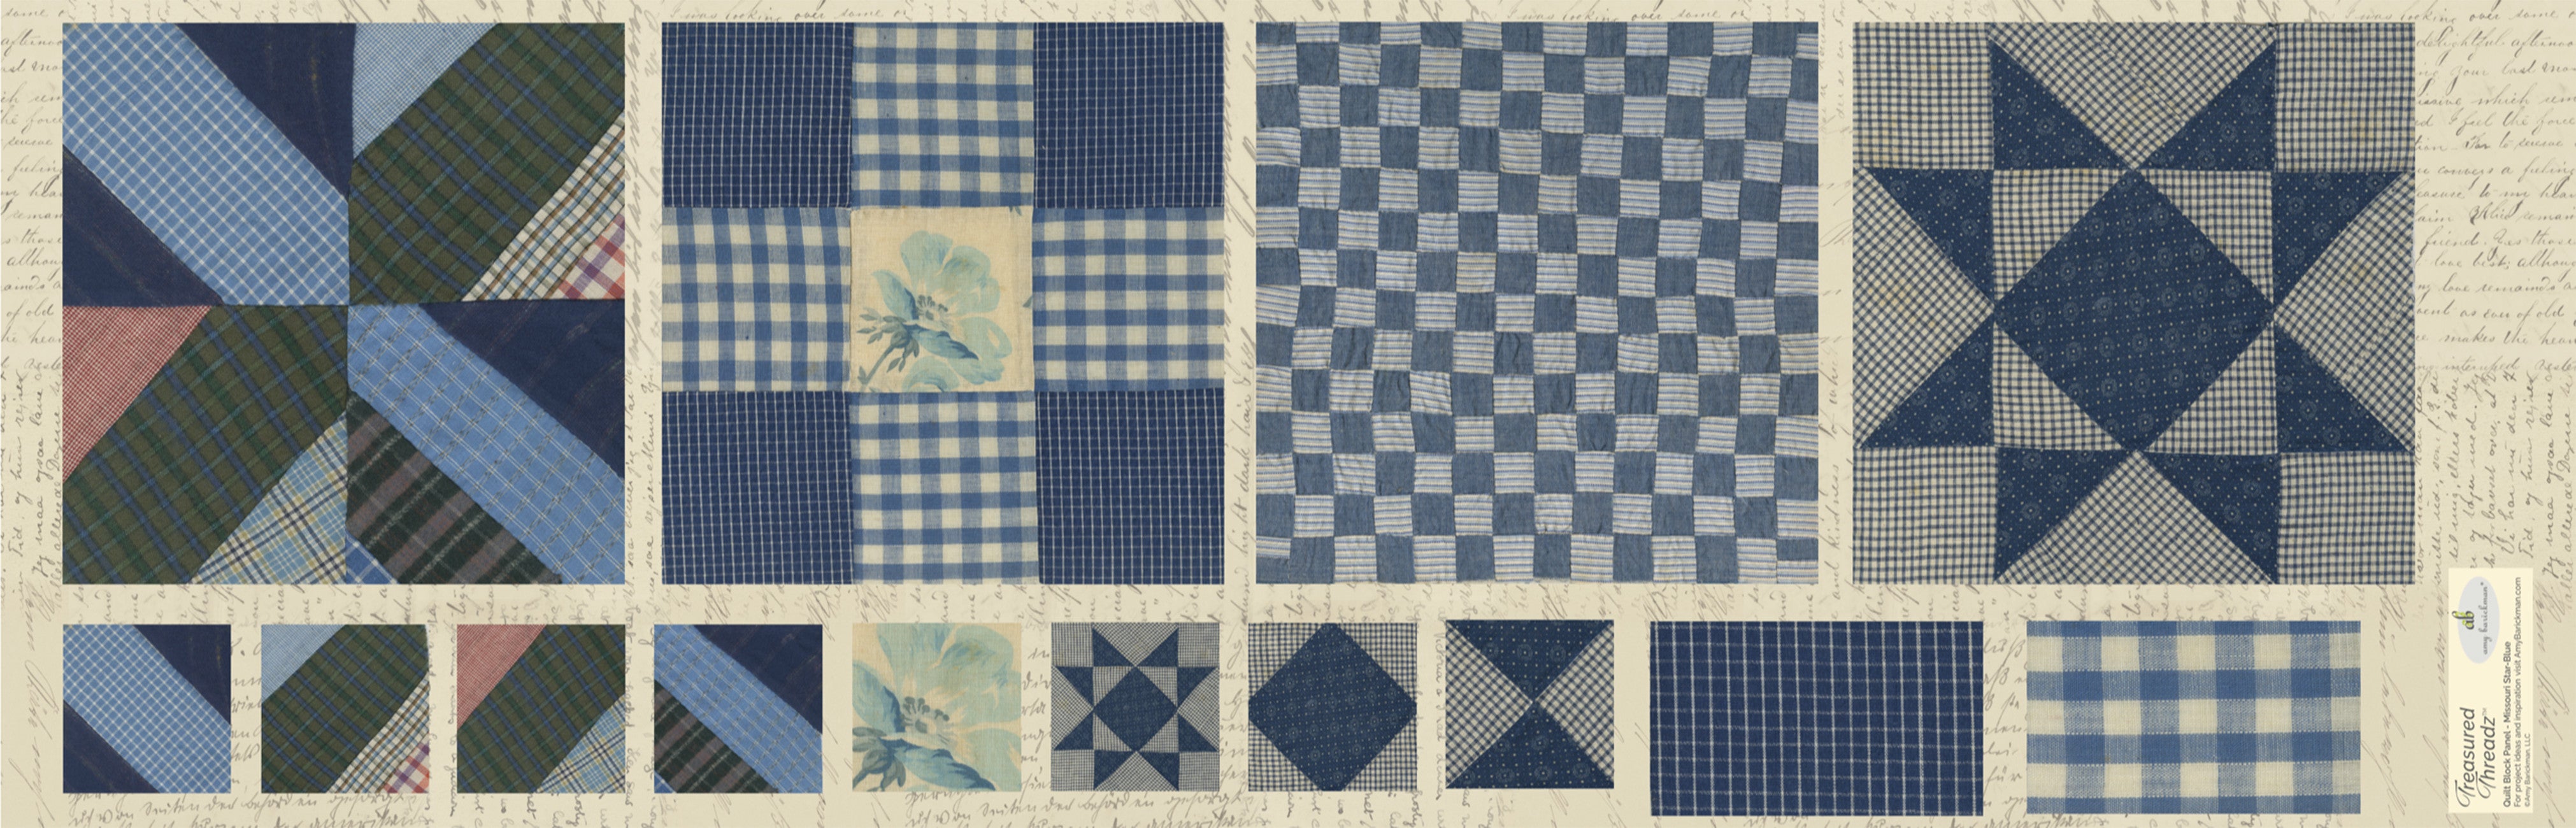 Missouri Star Blue Quilt Block Panel by Amy Barickman for Treasured Threadz